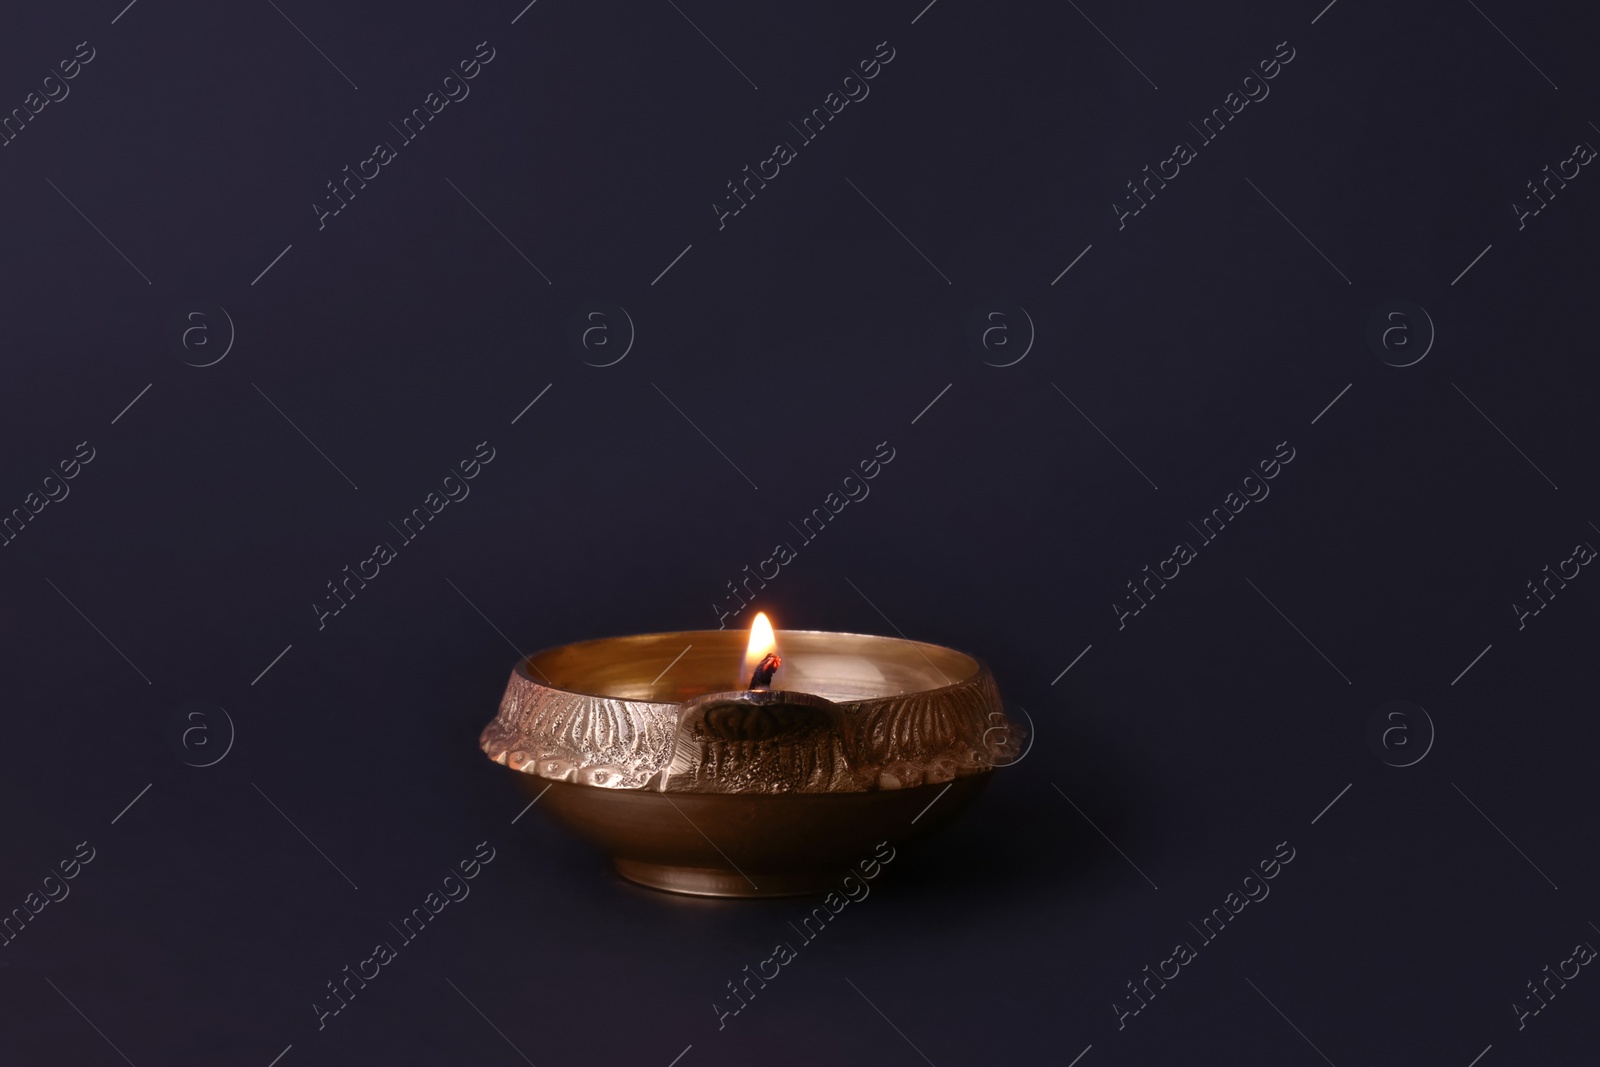 Photo of Lit diya lamp on black background. Diwali celebration